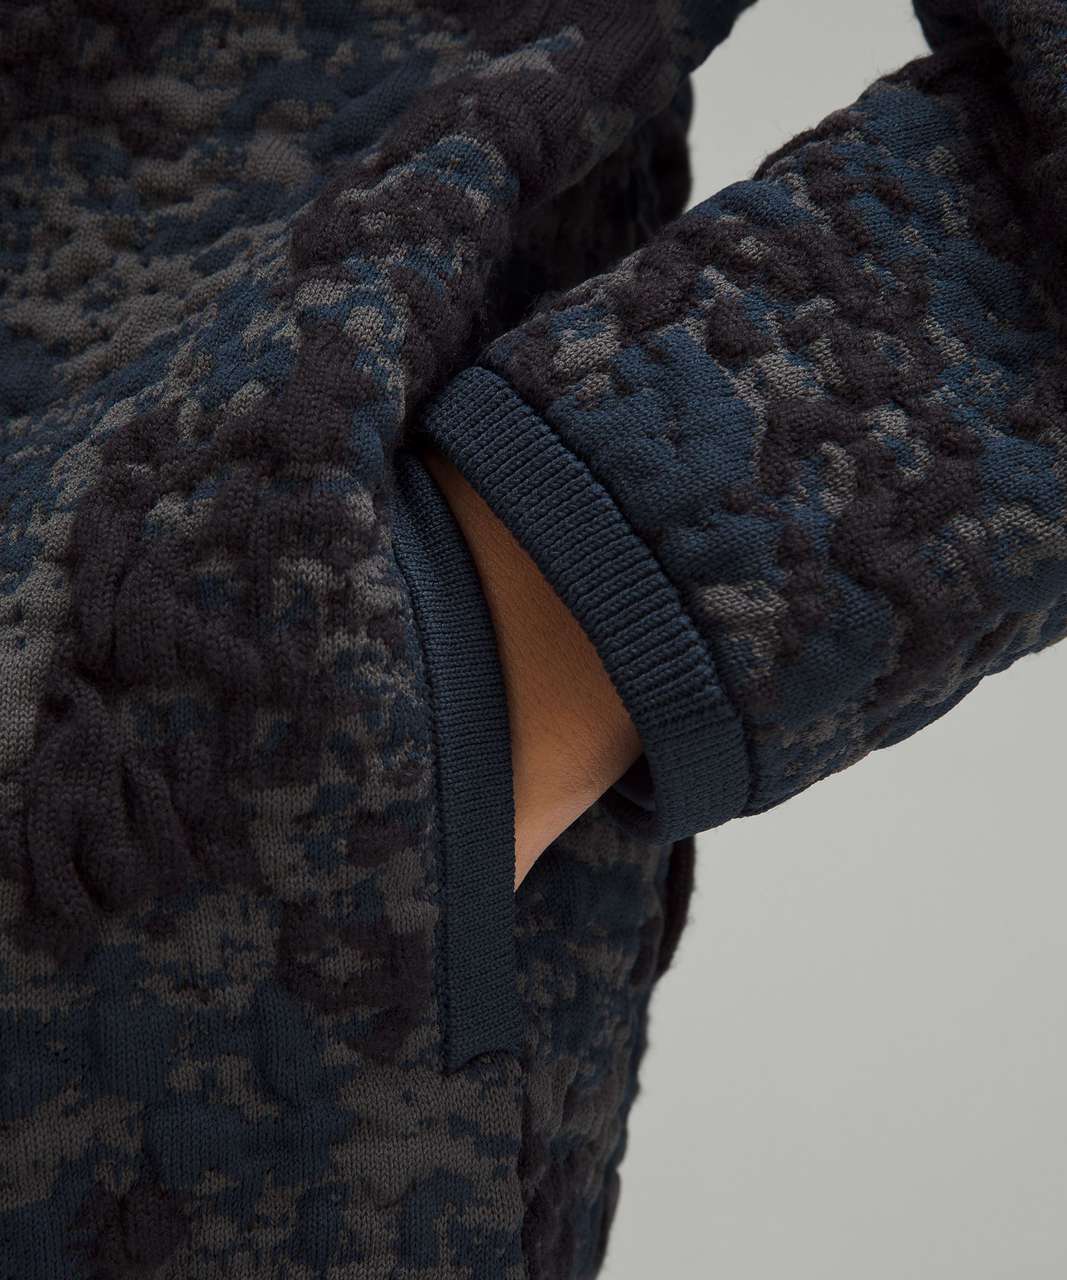 Lululemon Insulated Jacquard Full-Zip Jacket - True Navy / Graphite Grey / Black